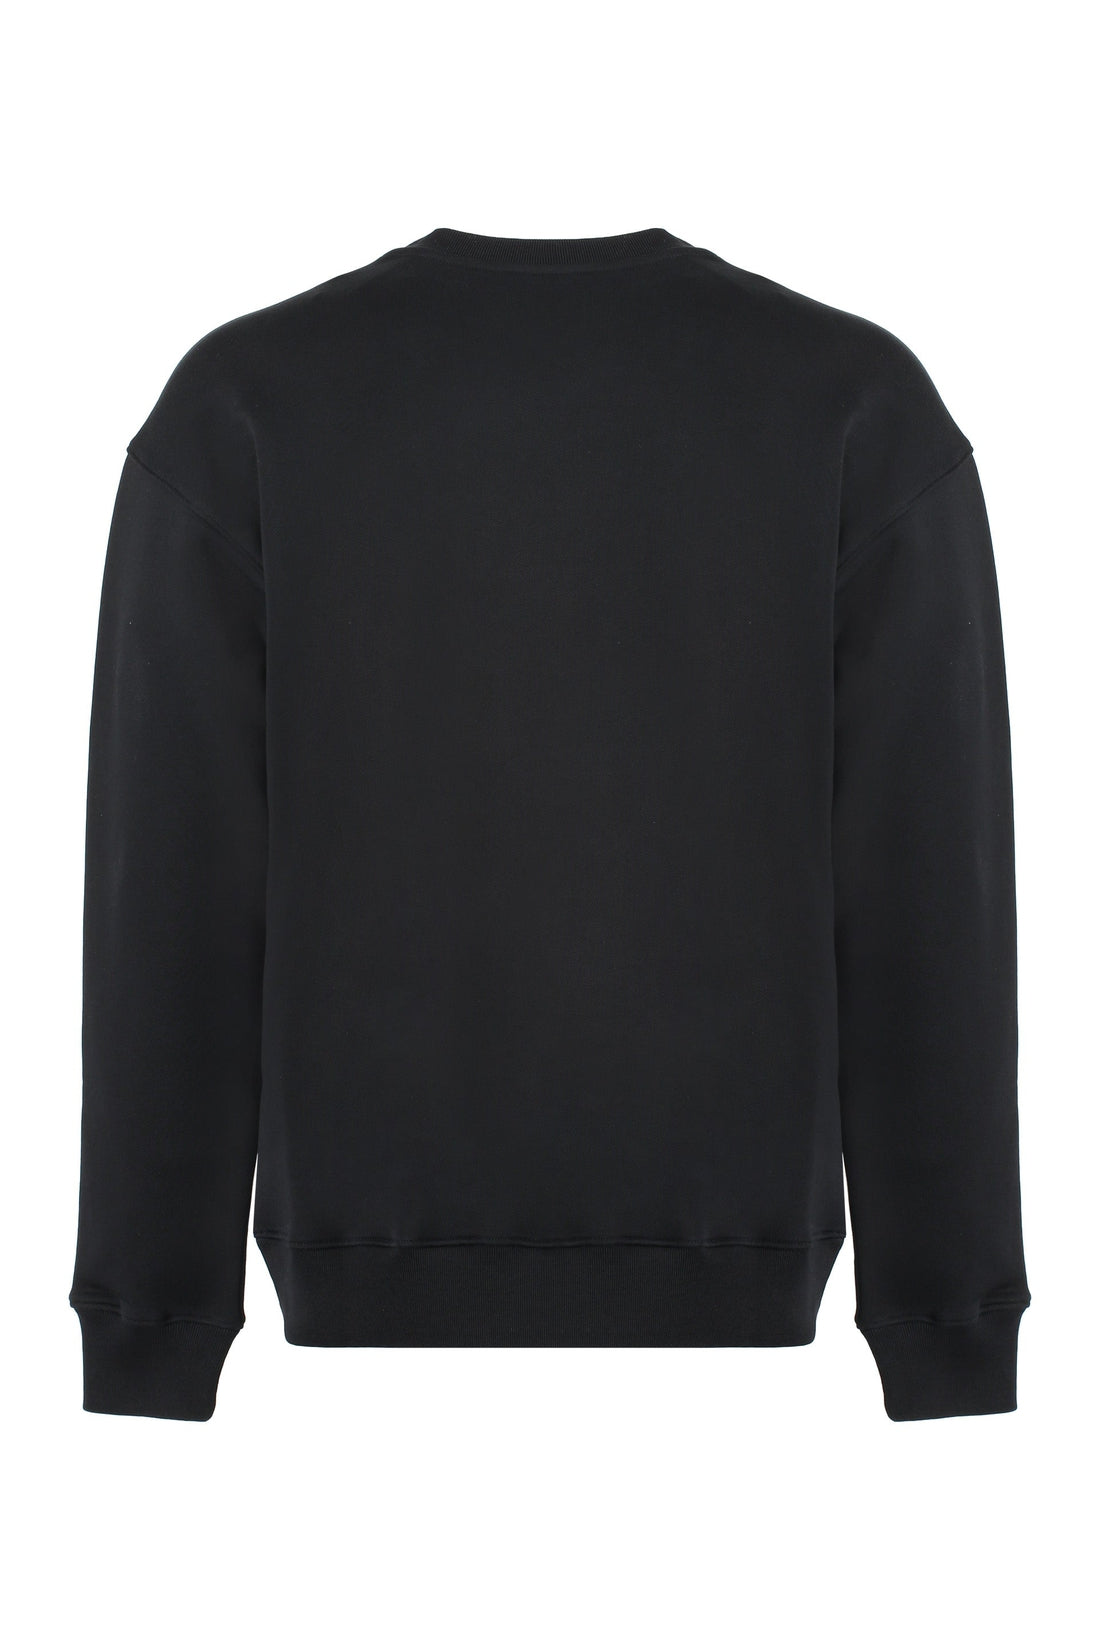 Moschino-OUTLET-SALE-Logo detail cotton sweatshirt-ARCHIVIST